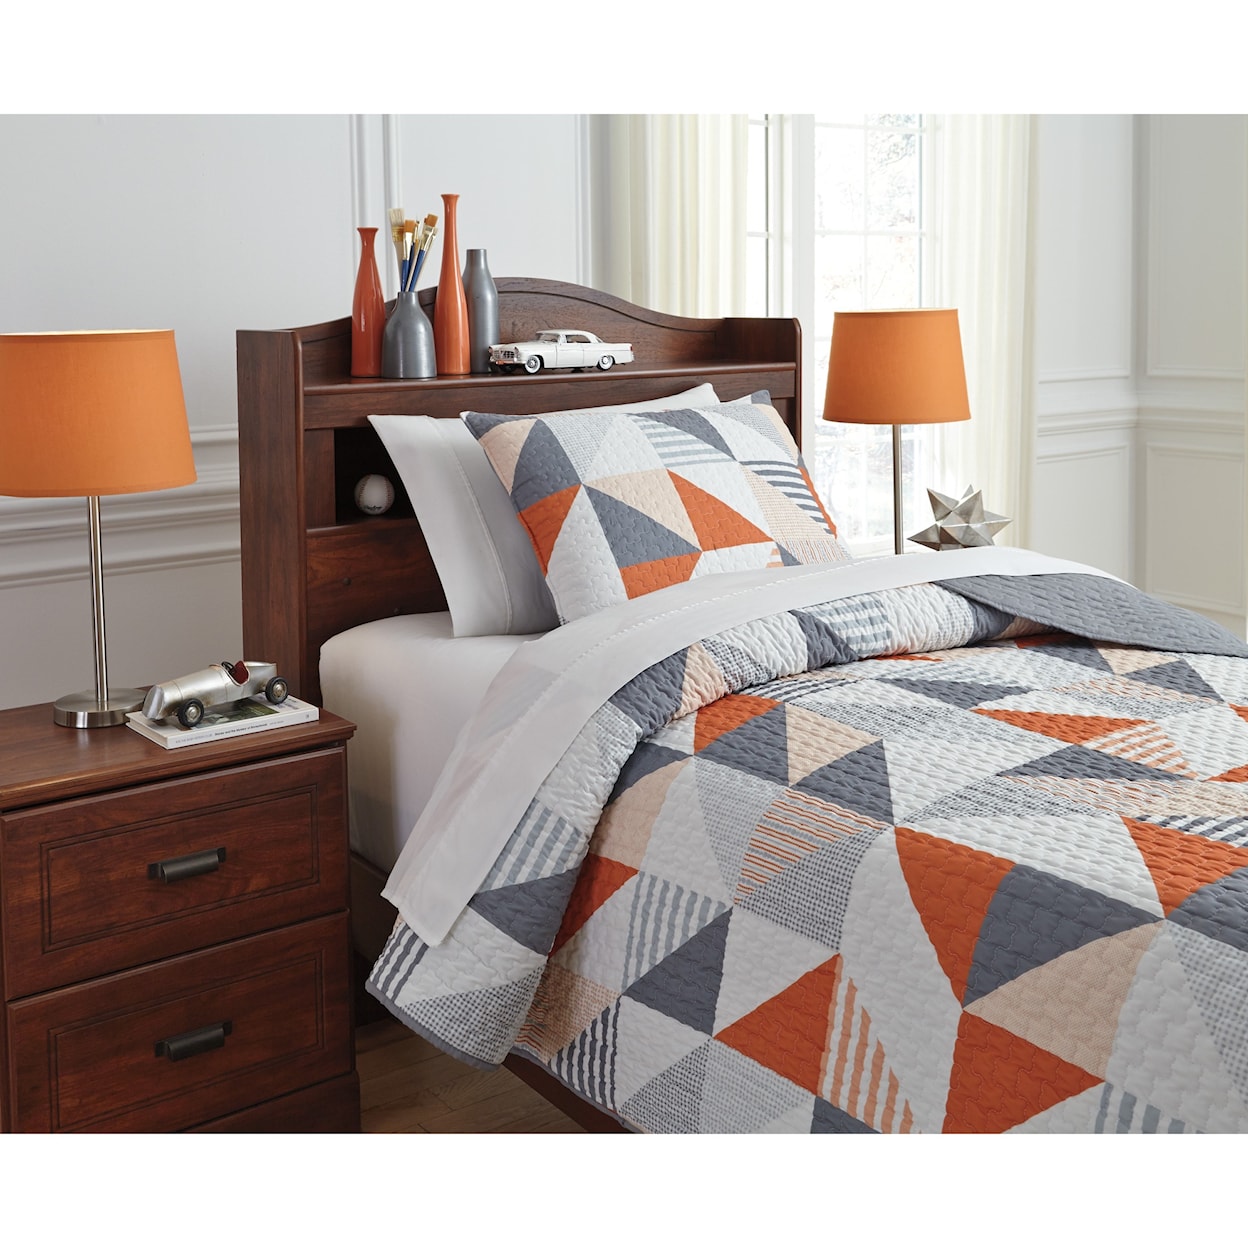 Ashley Furniture Signature Design Bedding Sets Twin Layne Multi Coverlet Set